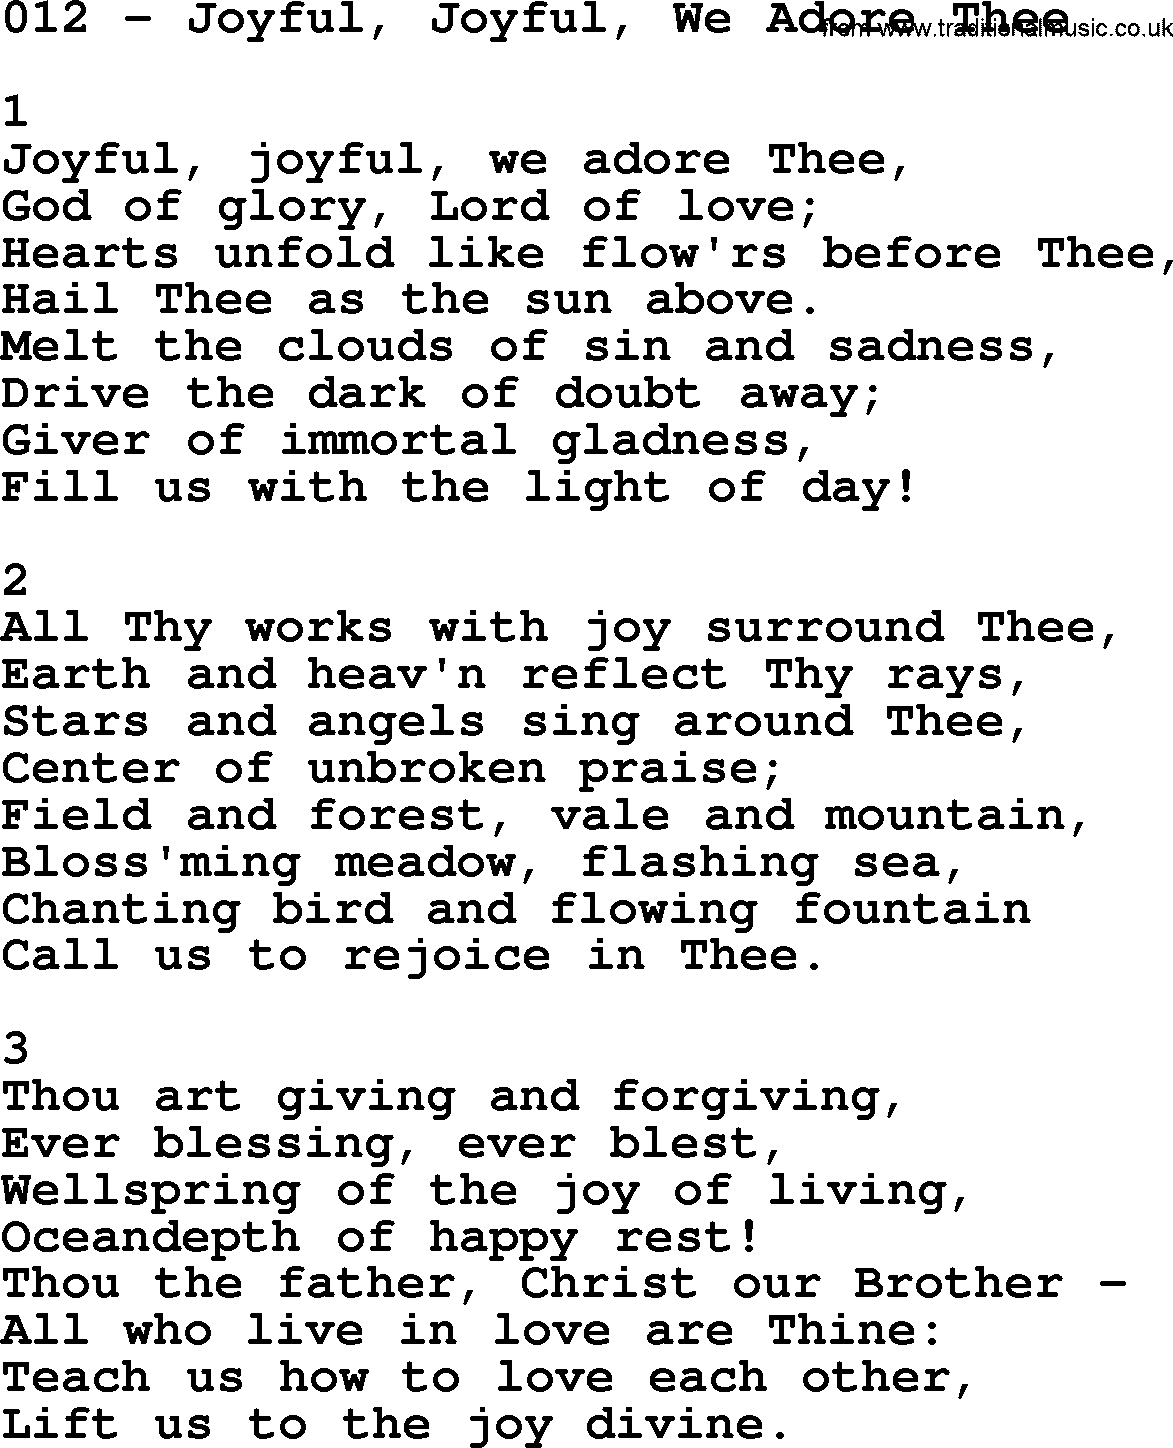 Complete Adventis Hymnal, title: 012-Joyful, Joyful, We Adore Thee, with lyrics, midi, mp3, powerpoints(PPT) and PDF,